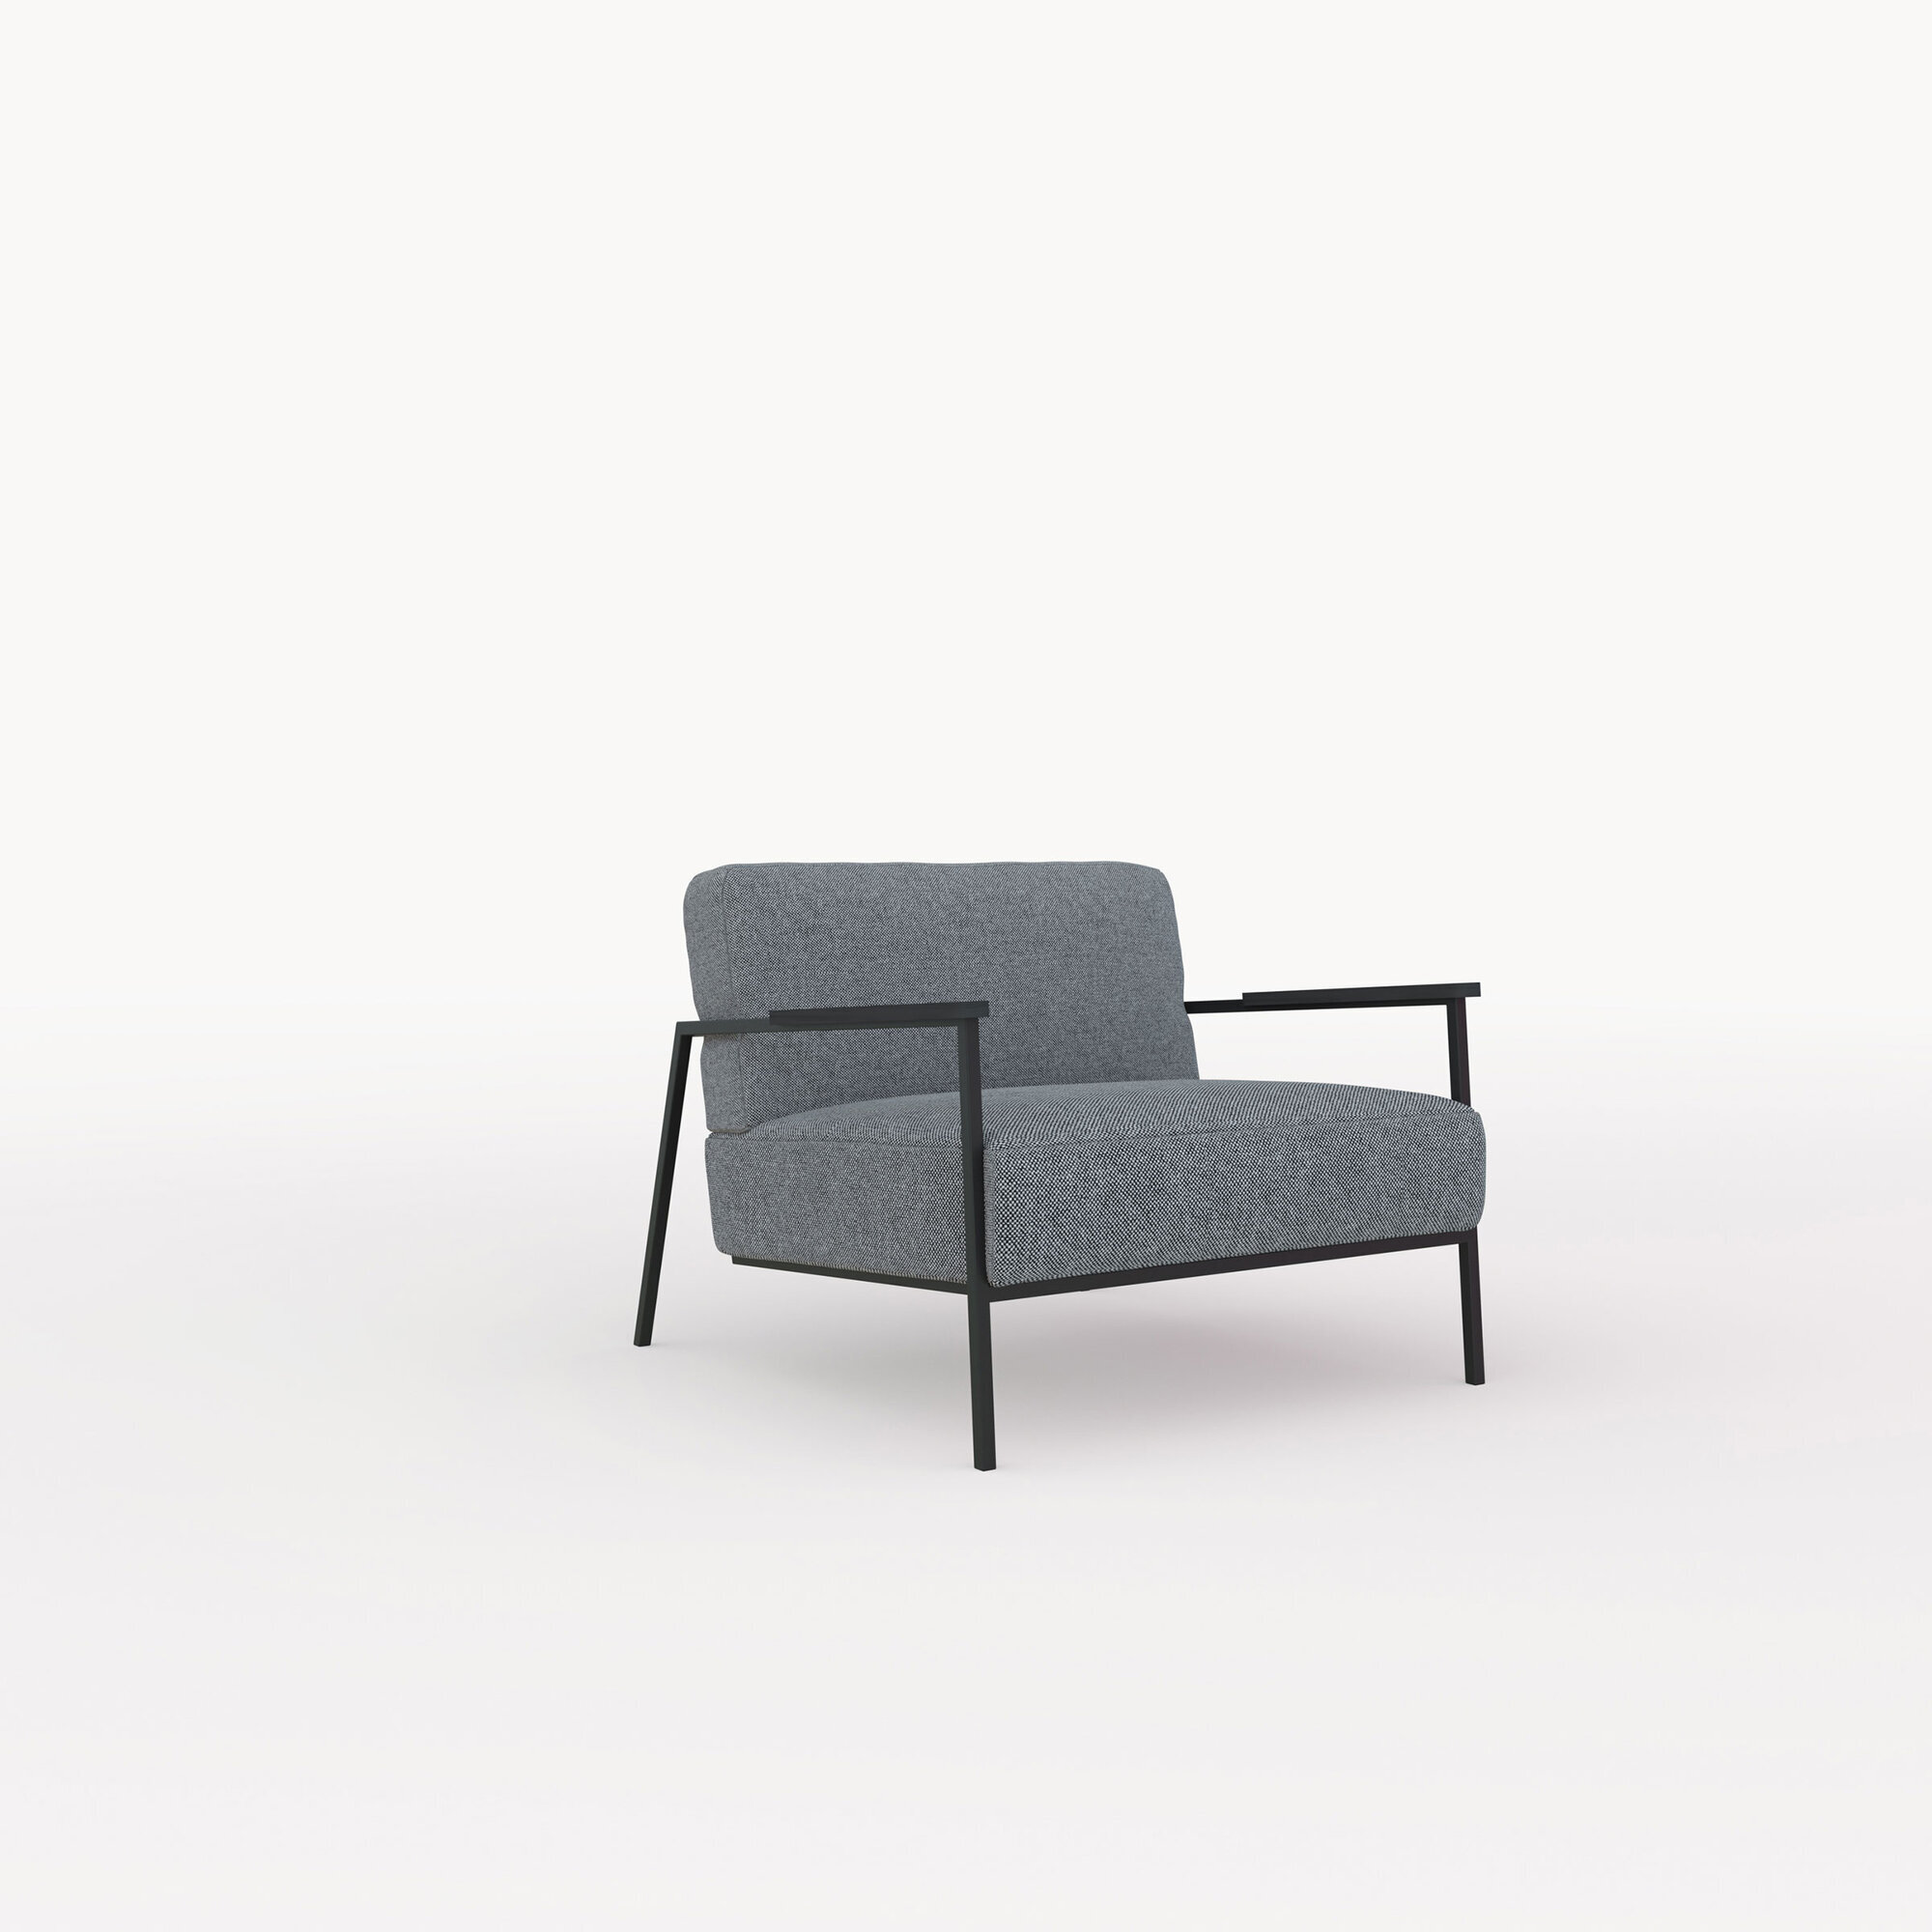 Design modern sofa | Co lounge chair 1 seater  hallingdal65 166 | Studio HENK| Listing_image